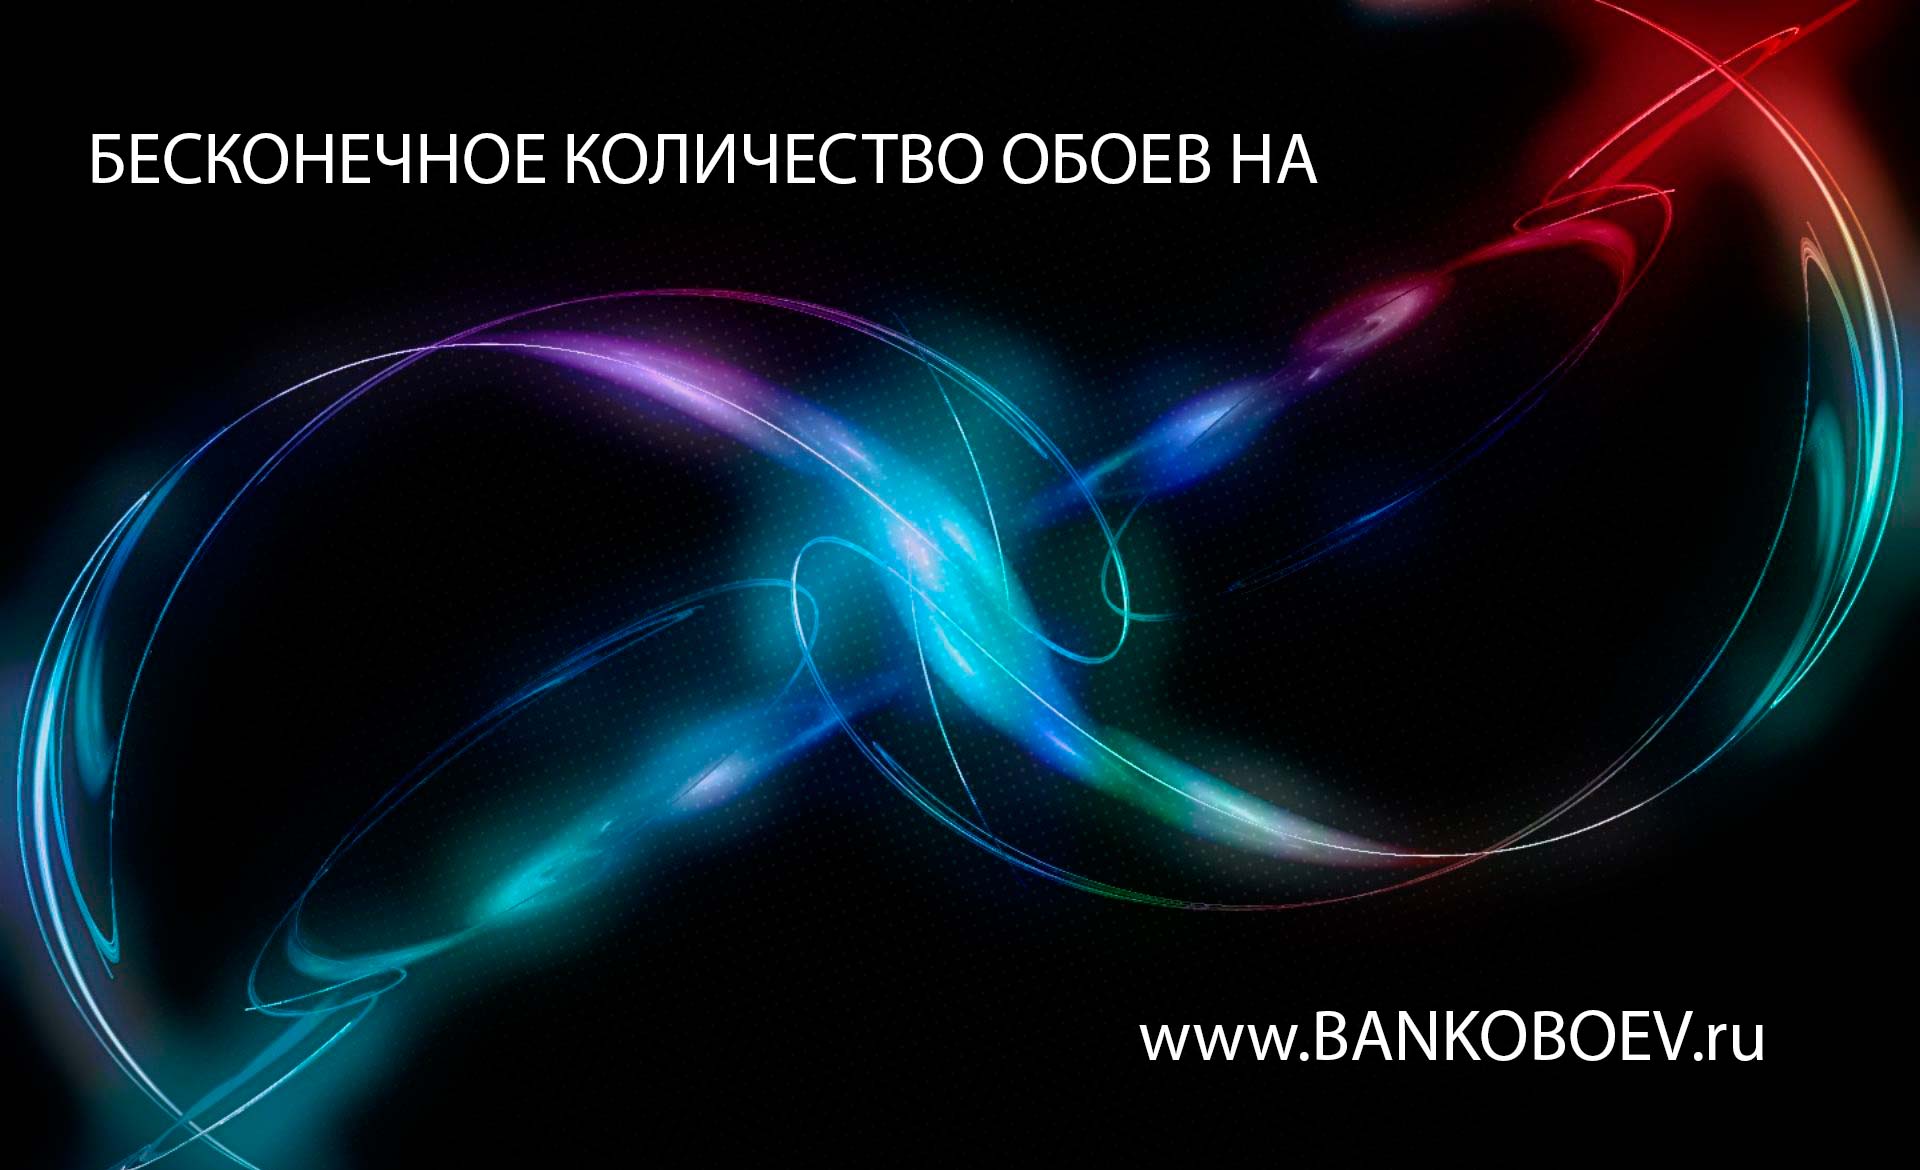 Source Bankoboev Ru Image Mtu3mdqw